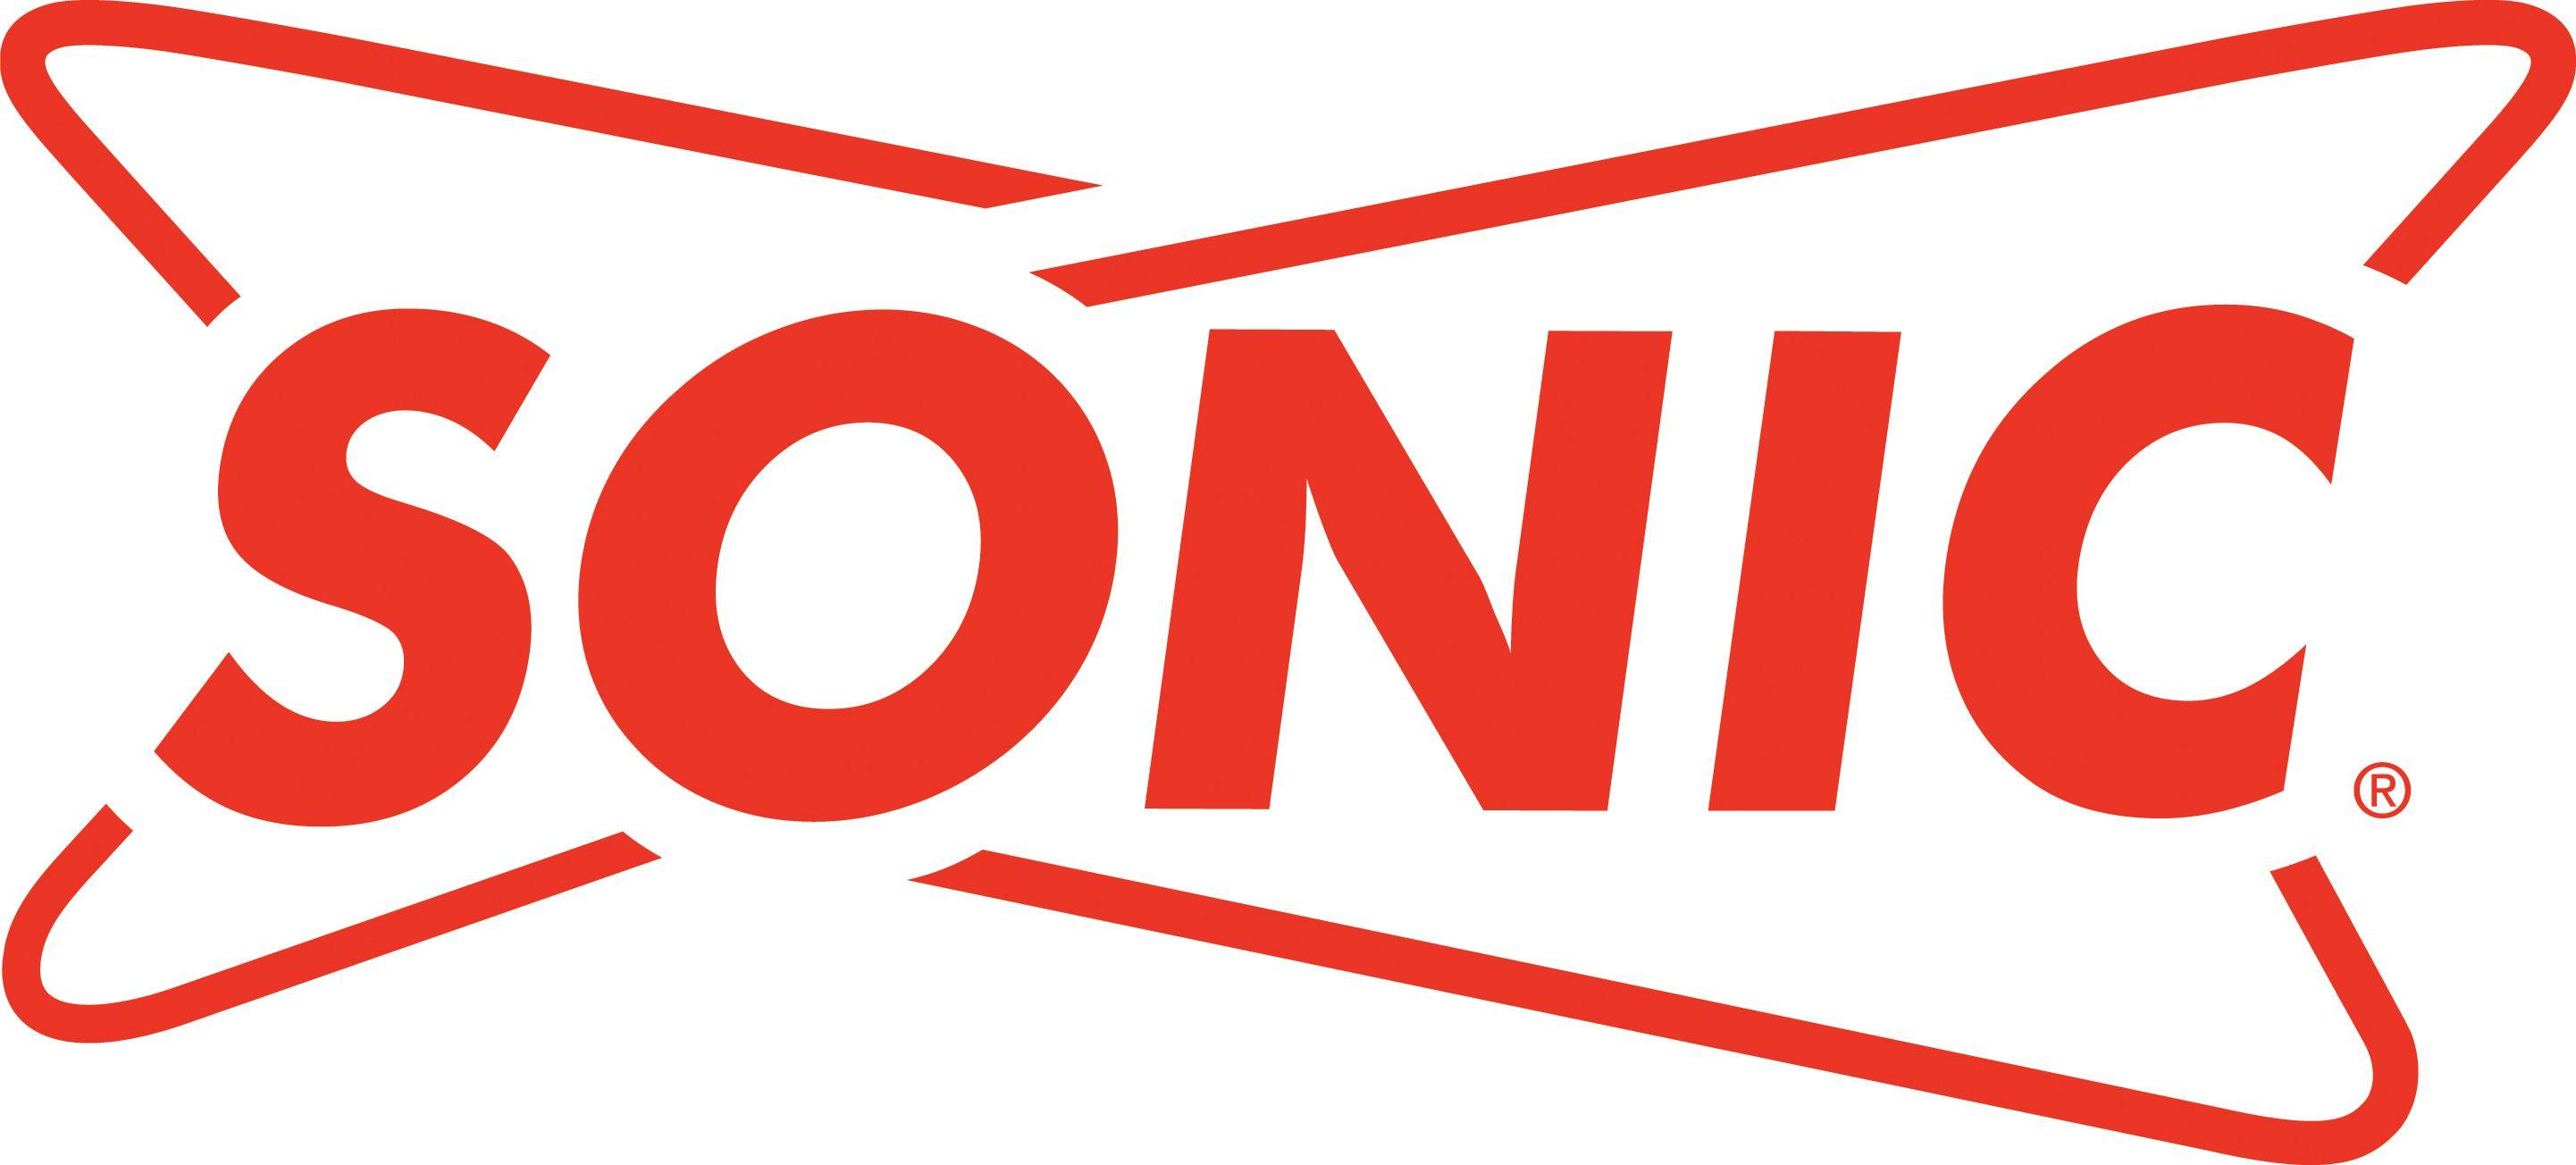 Sonic Drive in Logo LogoDix